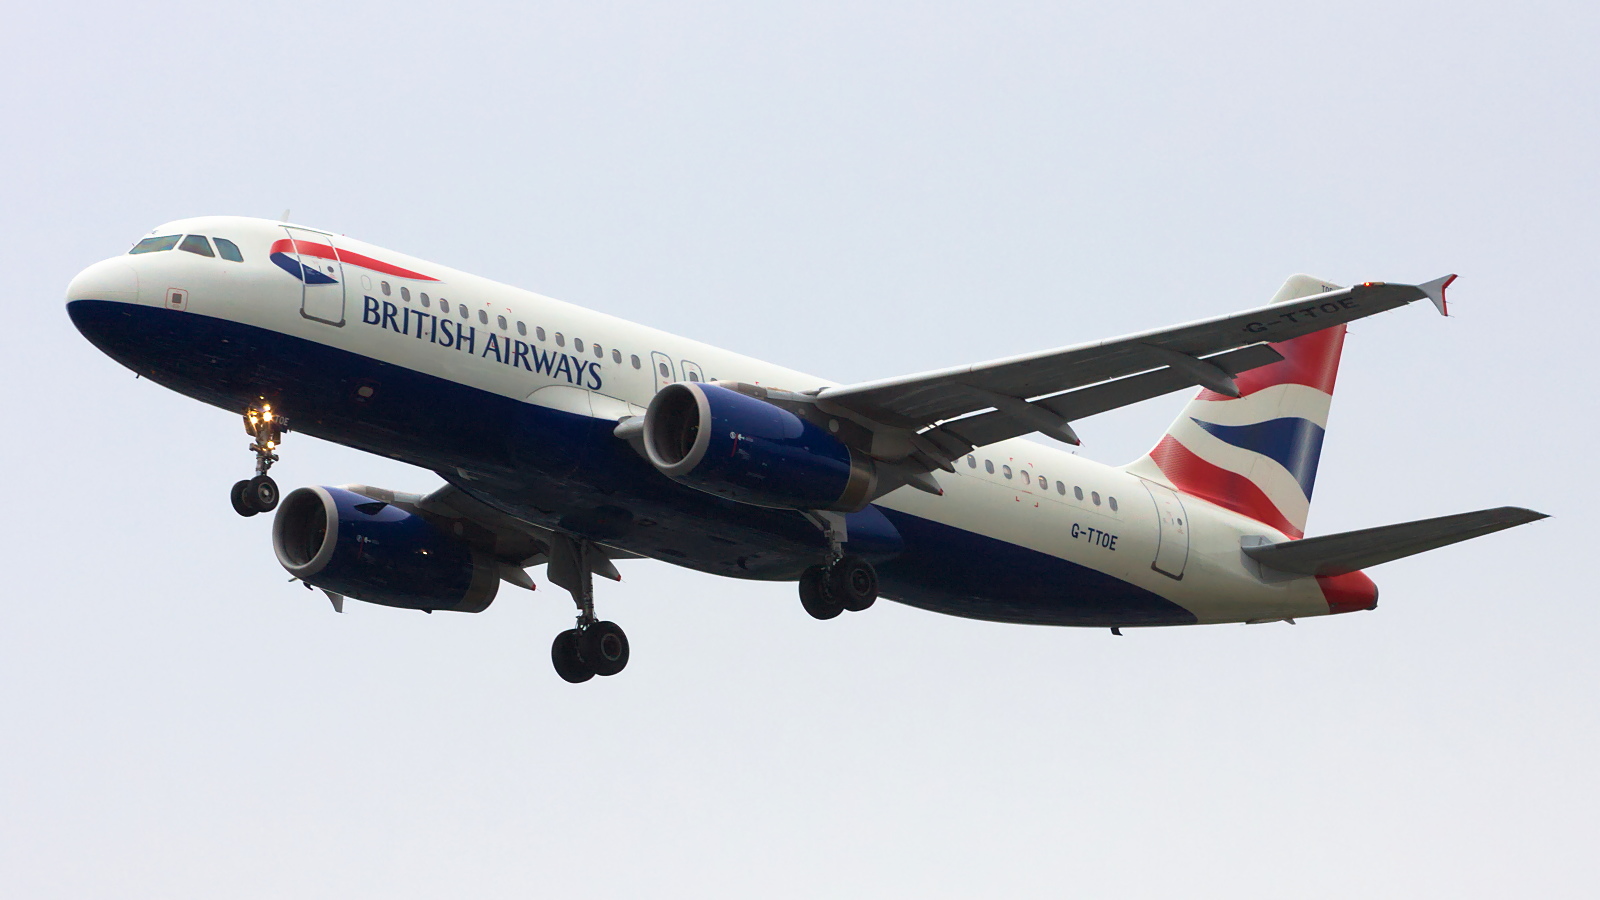 G-TTOE ✈ British Airways Airbus A320-232 @ London-Heathrow